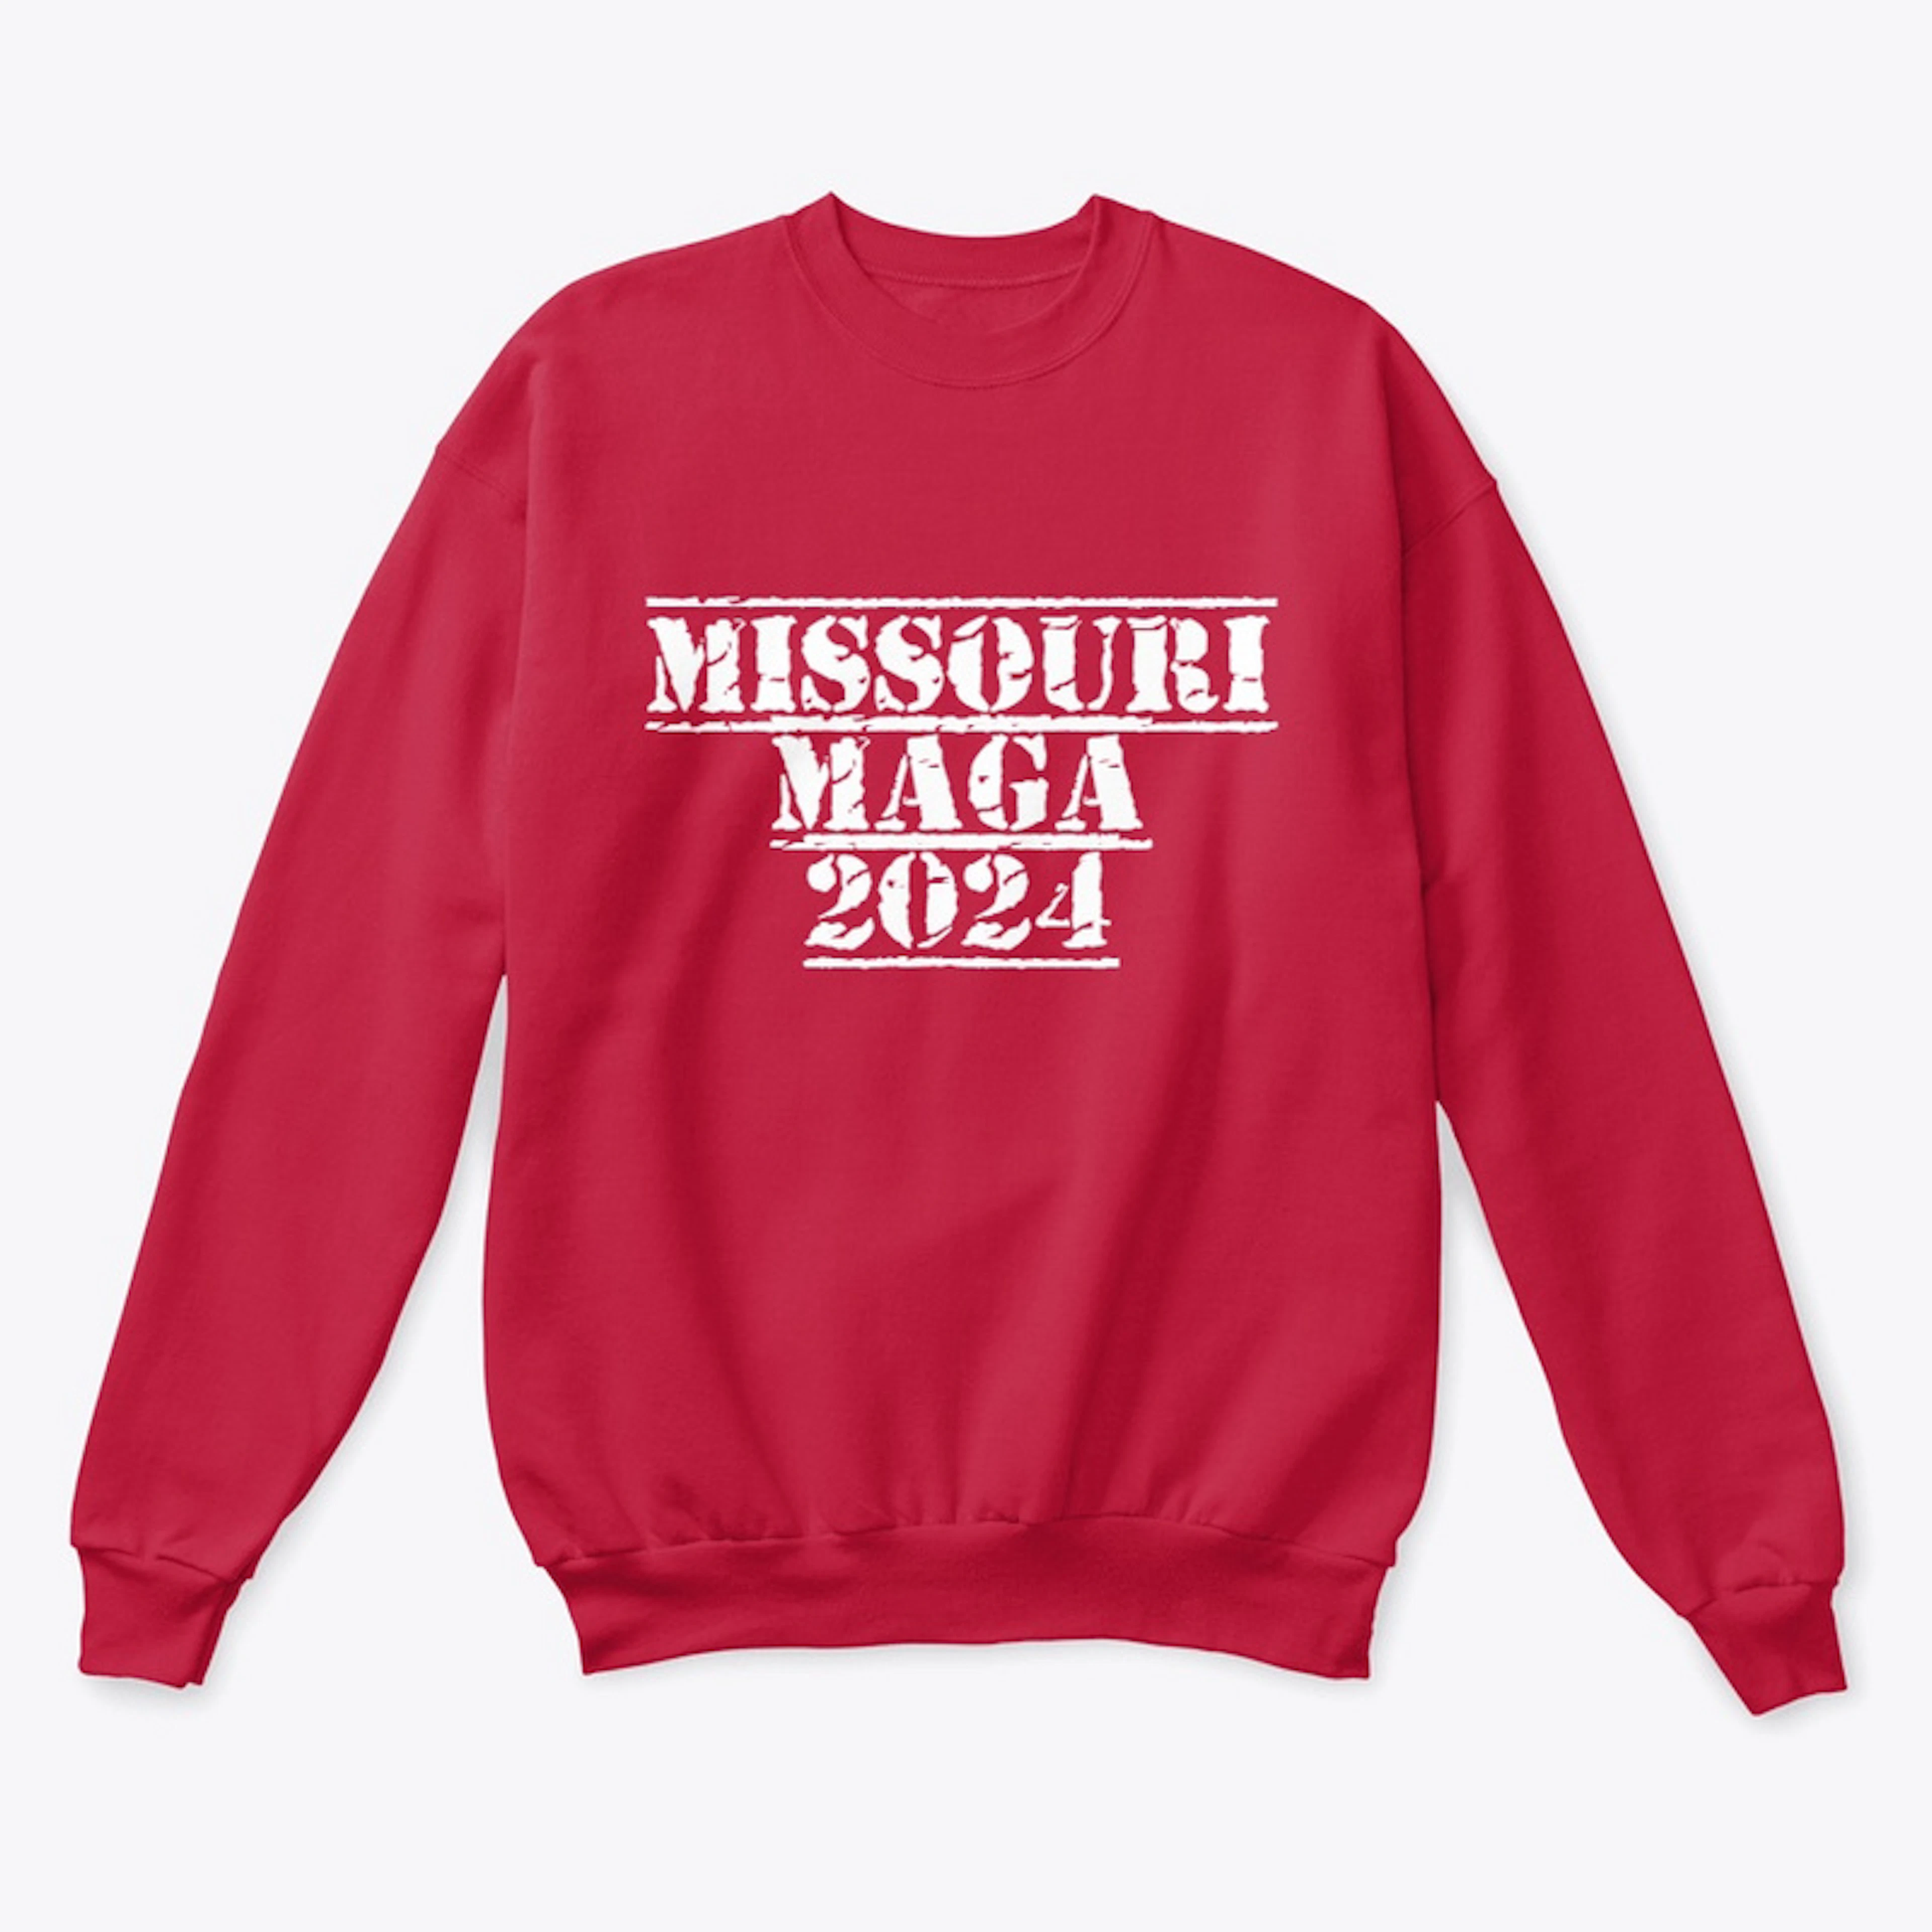 Missouri MAGA 2024